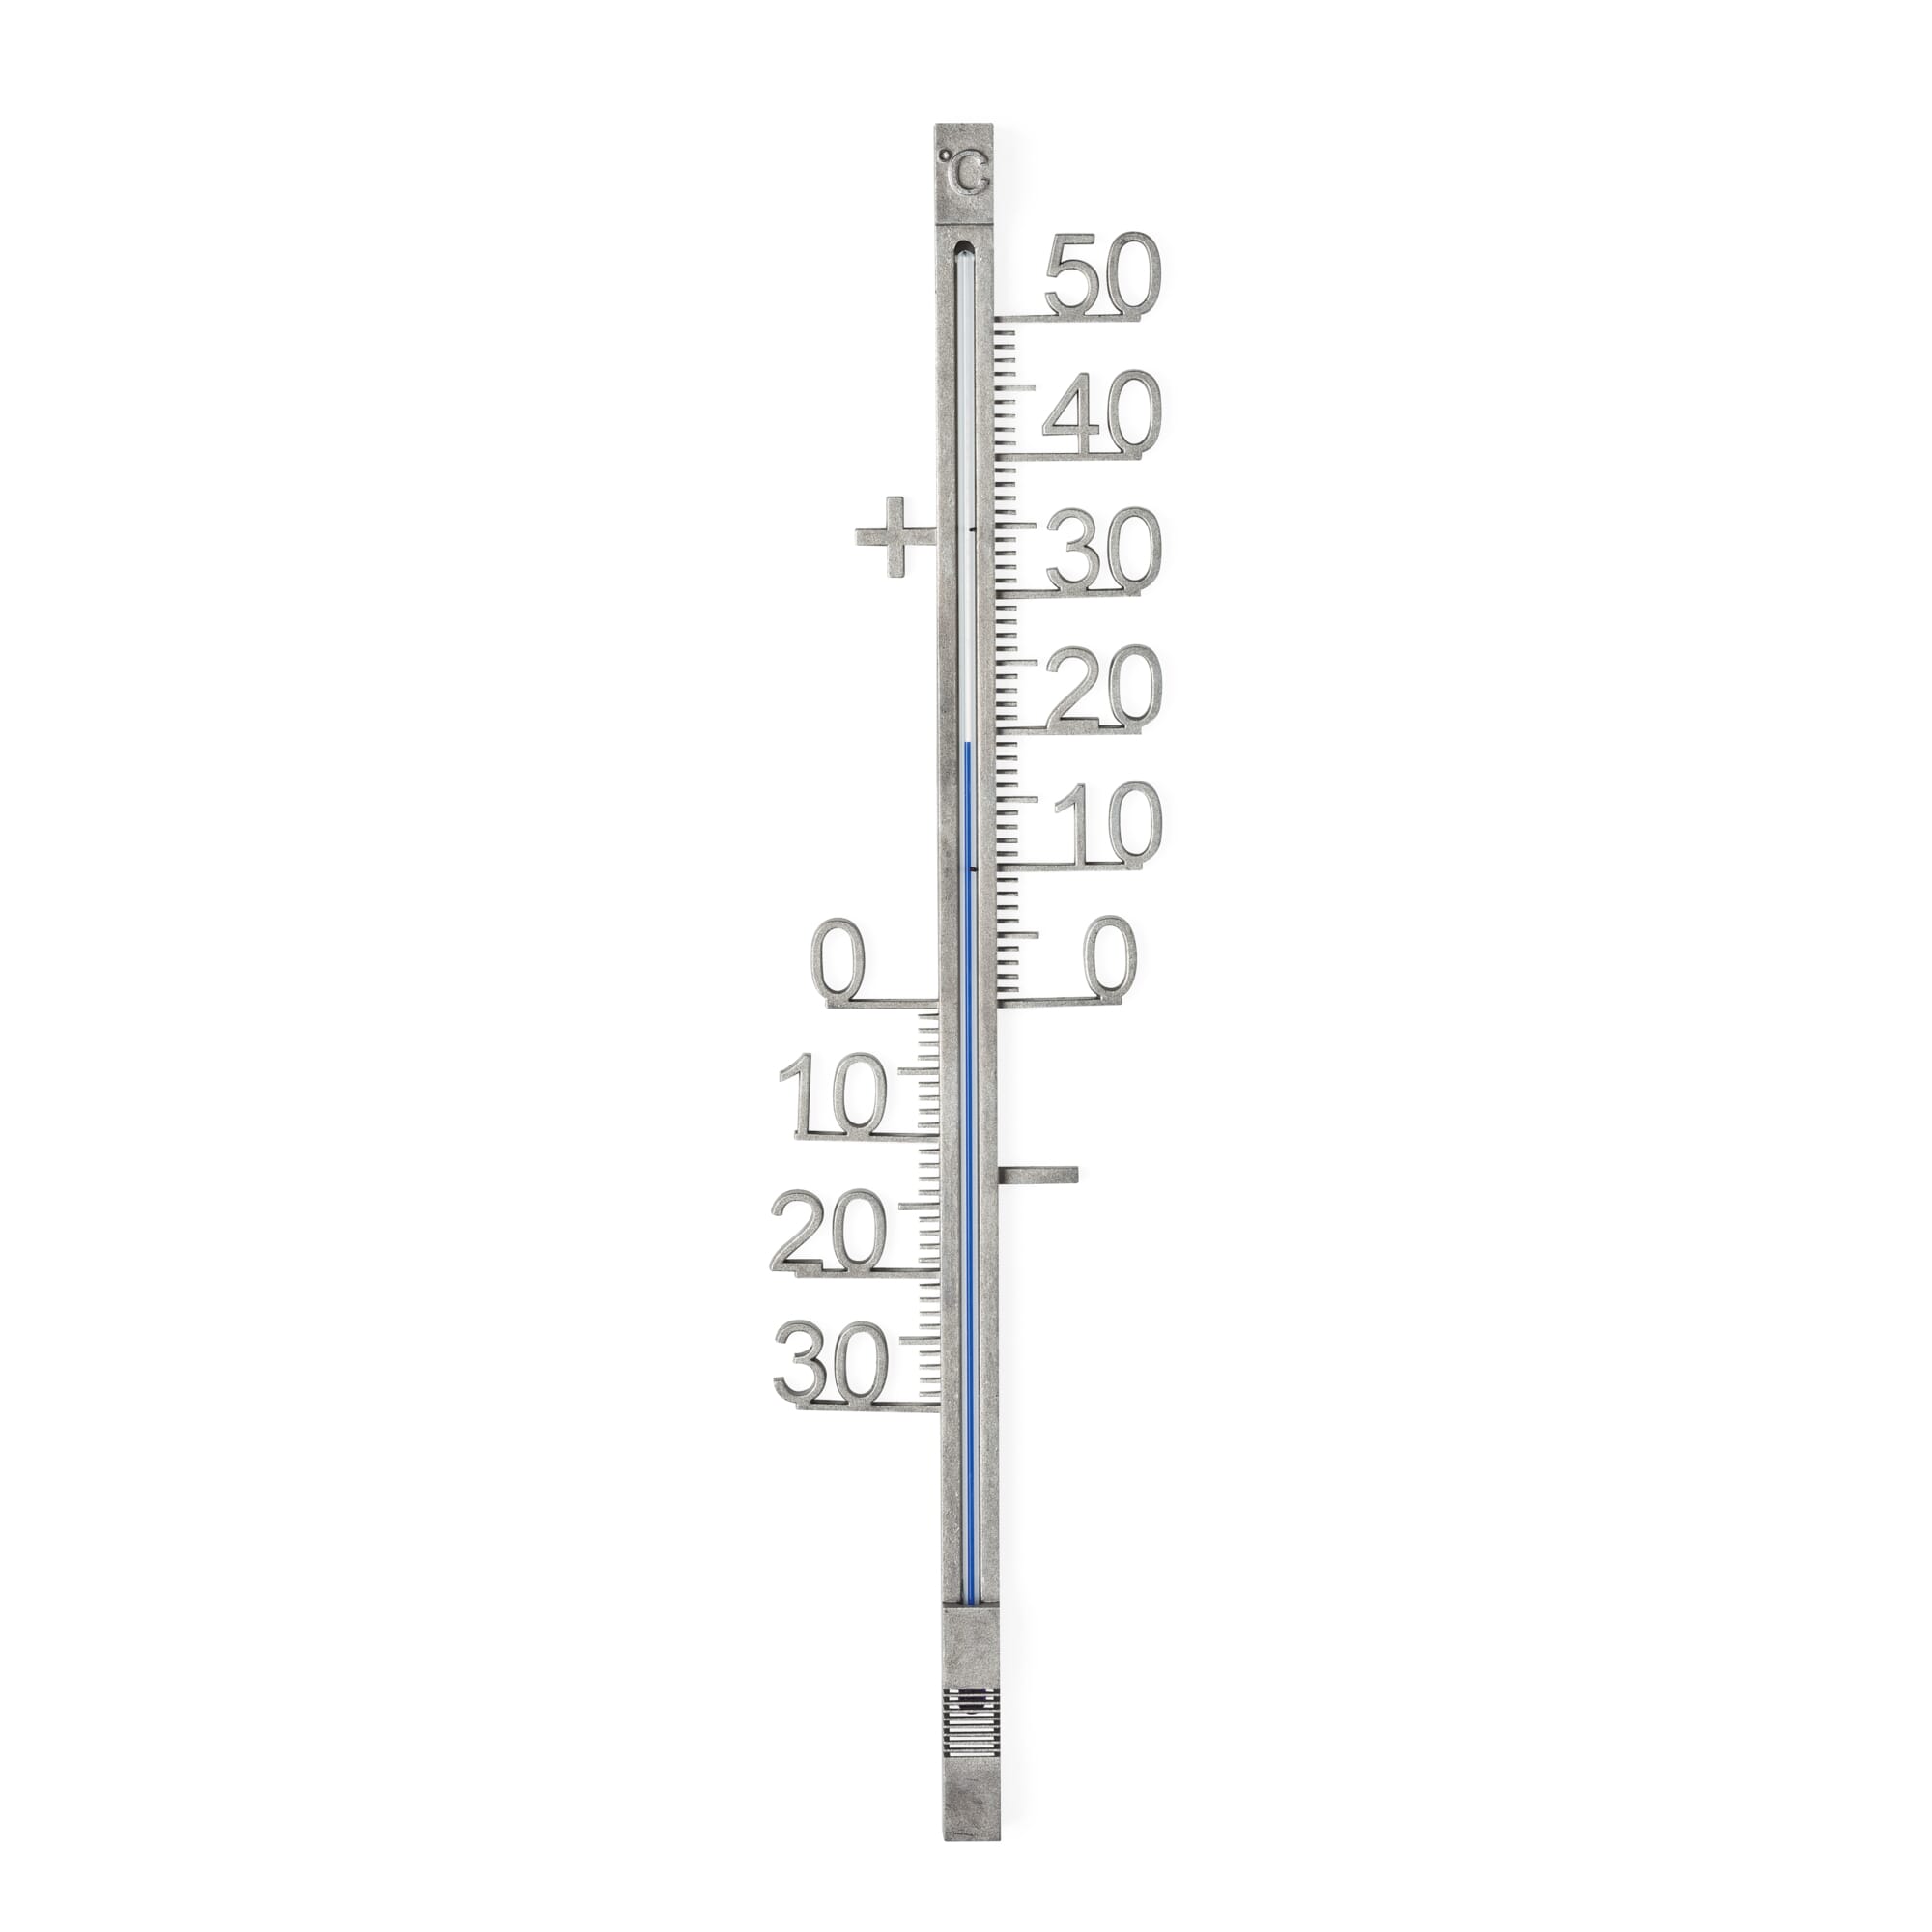 https://assets.manufactum.de/p/020/020542/20542_01.jpg/outdoor-thermometer-zinc-die-casting.jpg